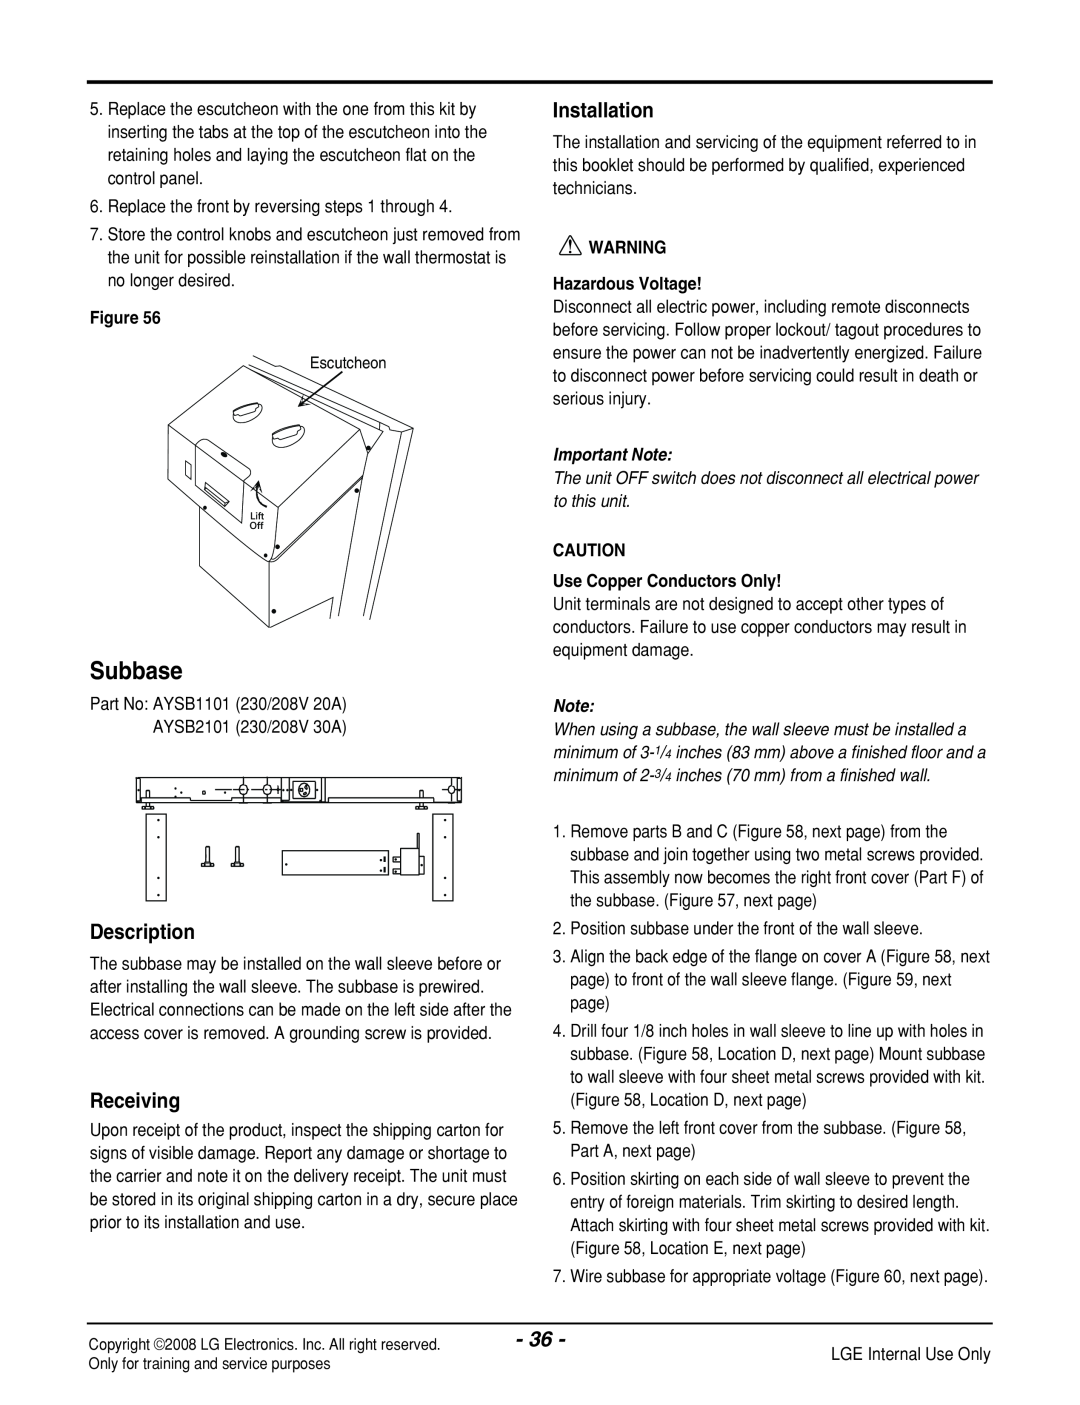 LG Electronics LP121CEM-Y8 manual Subbase, Installation, Description, Receiving, Hazardous Voltage, Important Note 